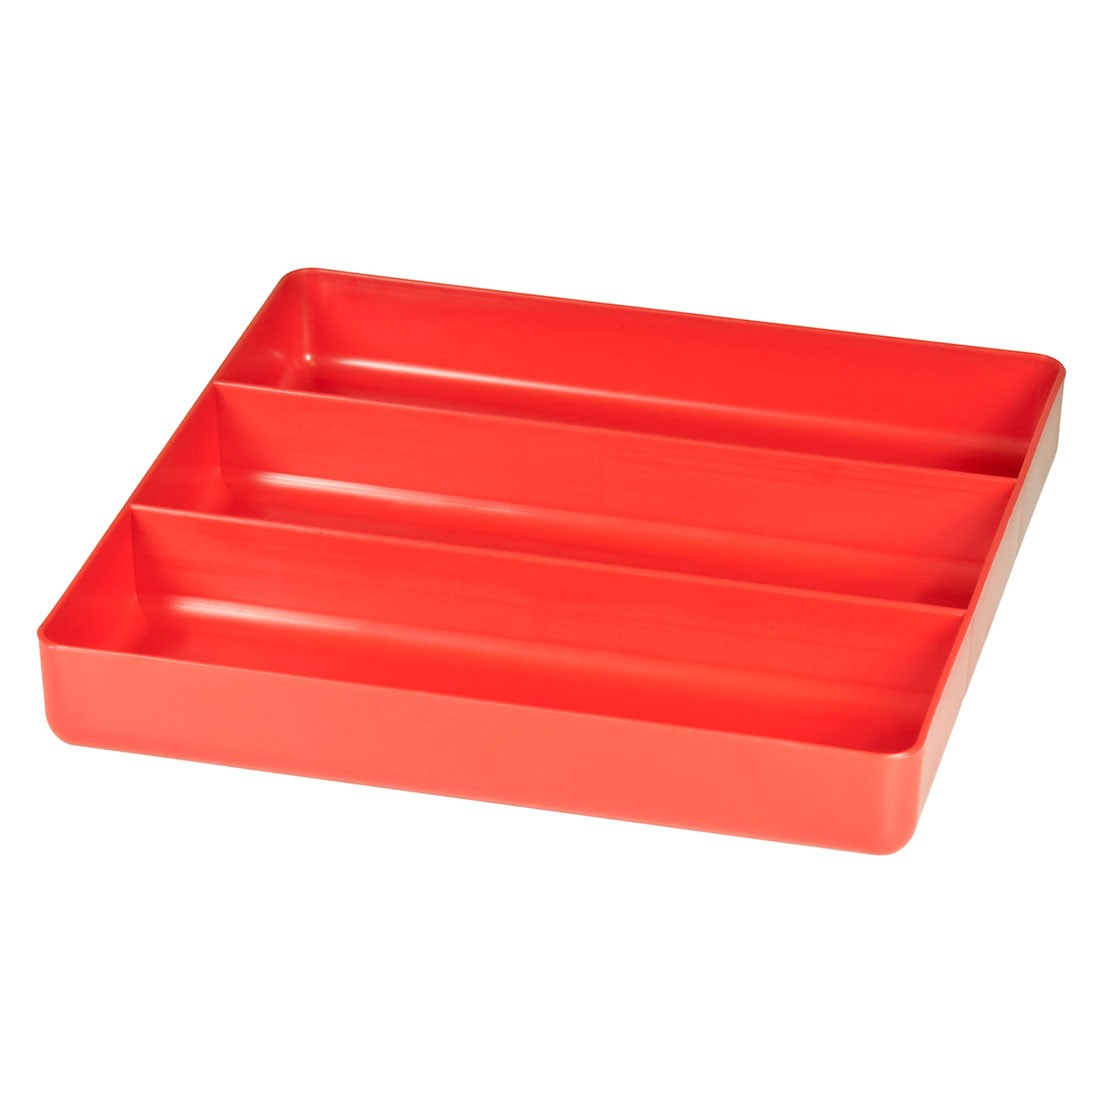 Three Compartment Organizer Tray-Red #5020